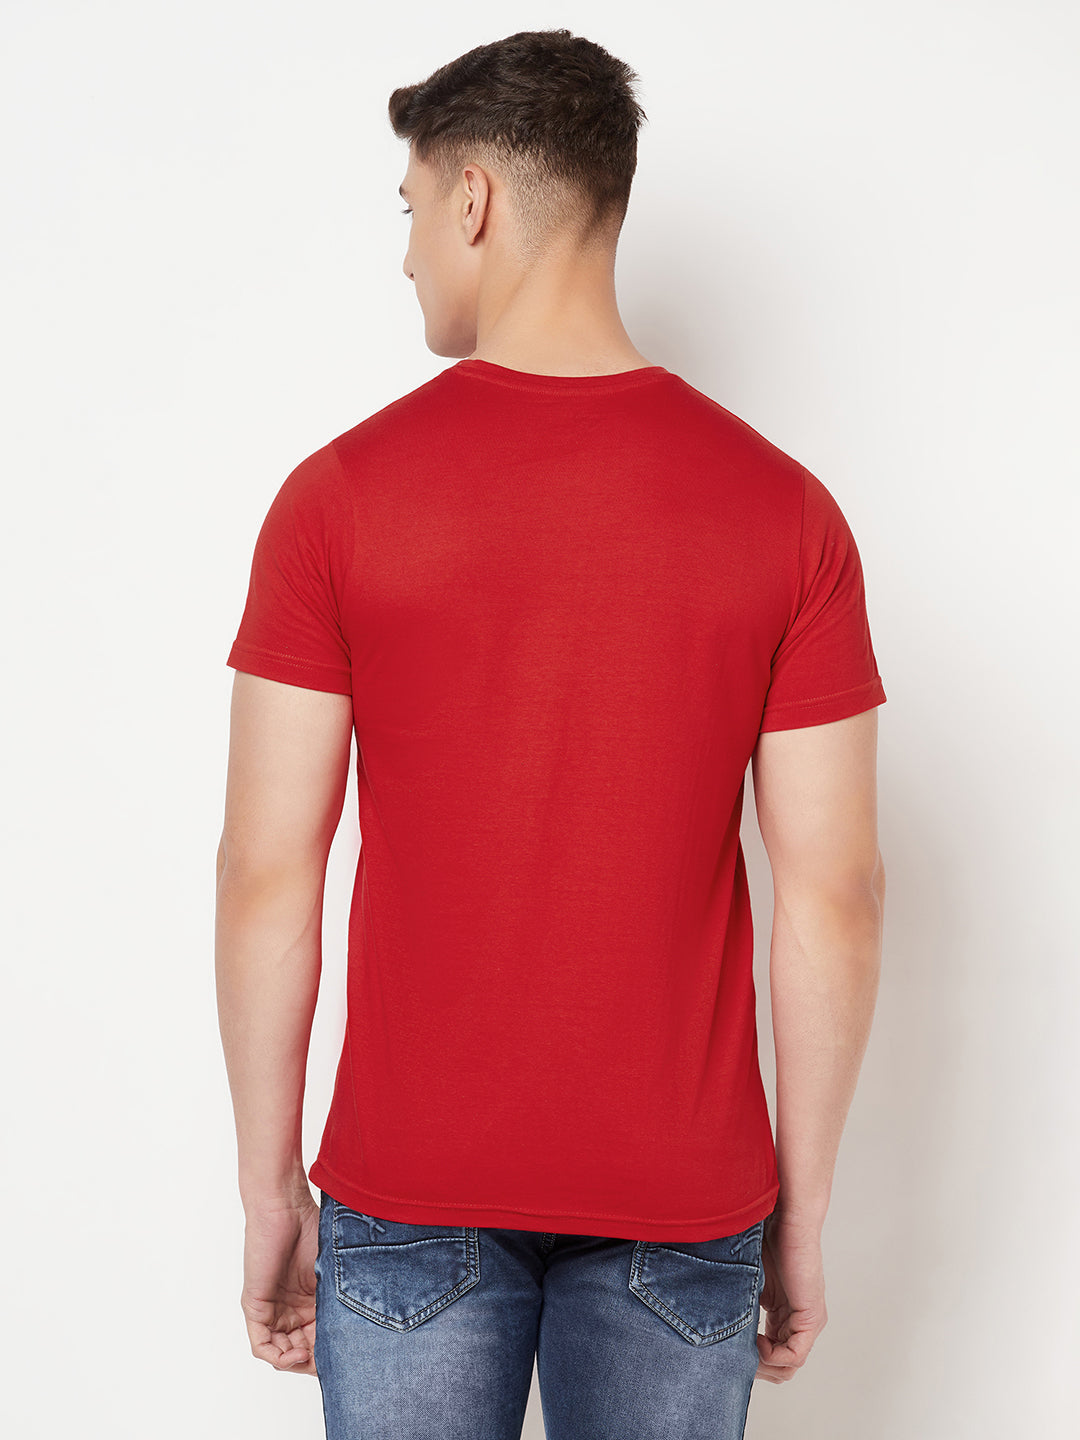 Premium Cotton Tshirts  (Pack of 3- Black, Red, Maroon)